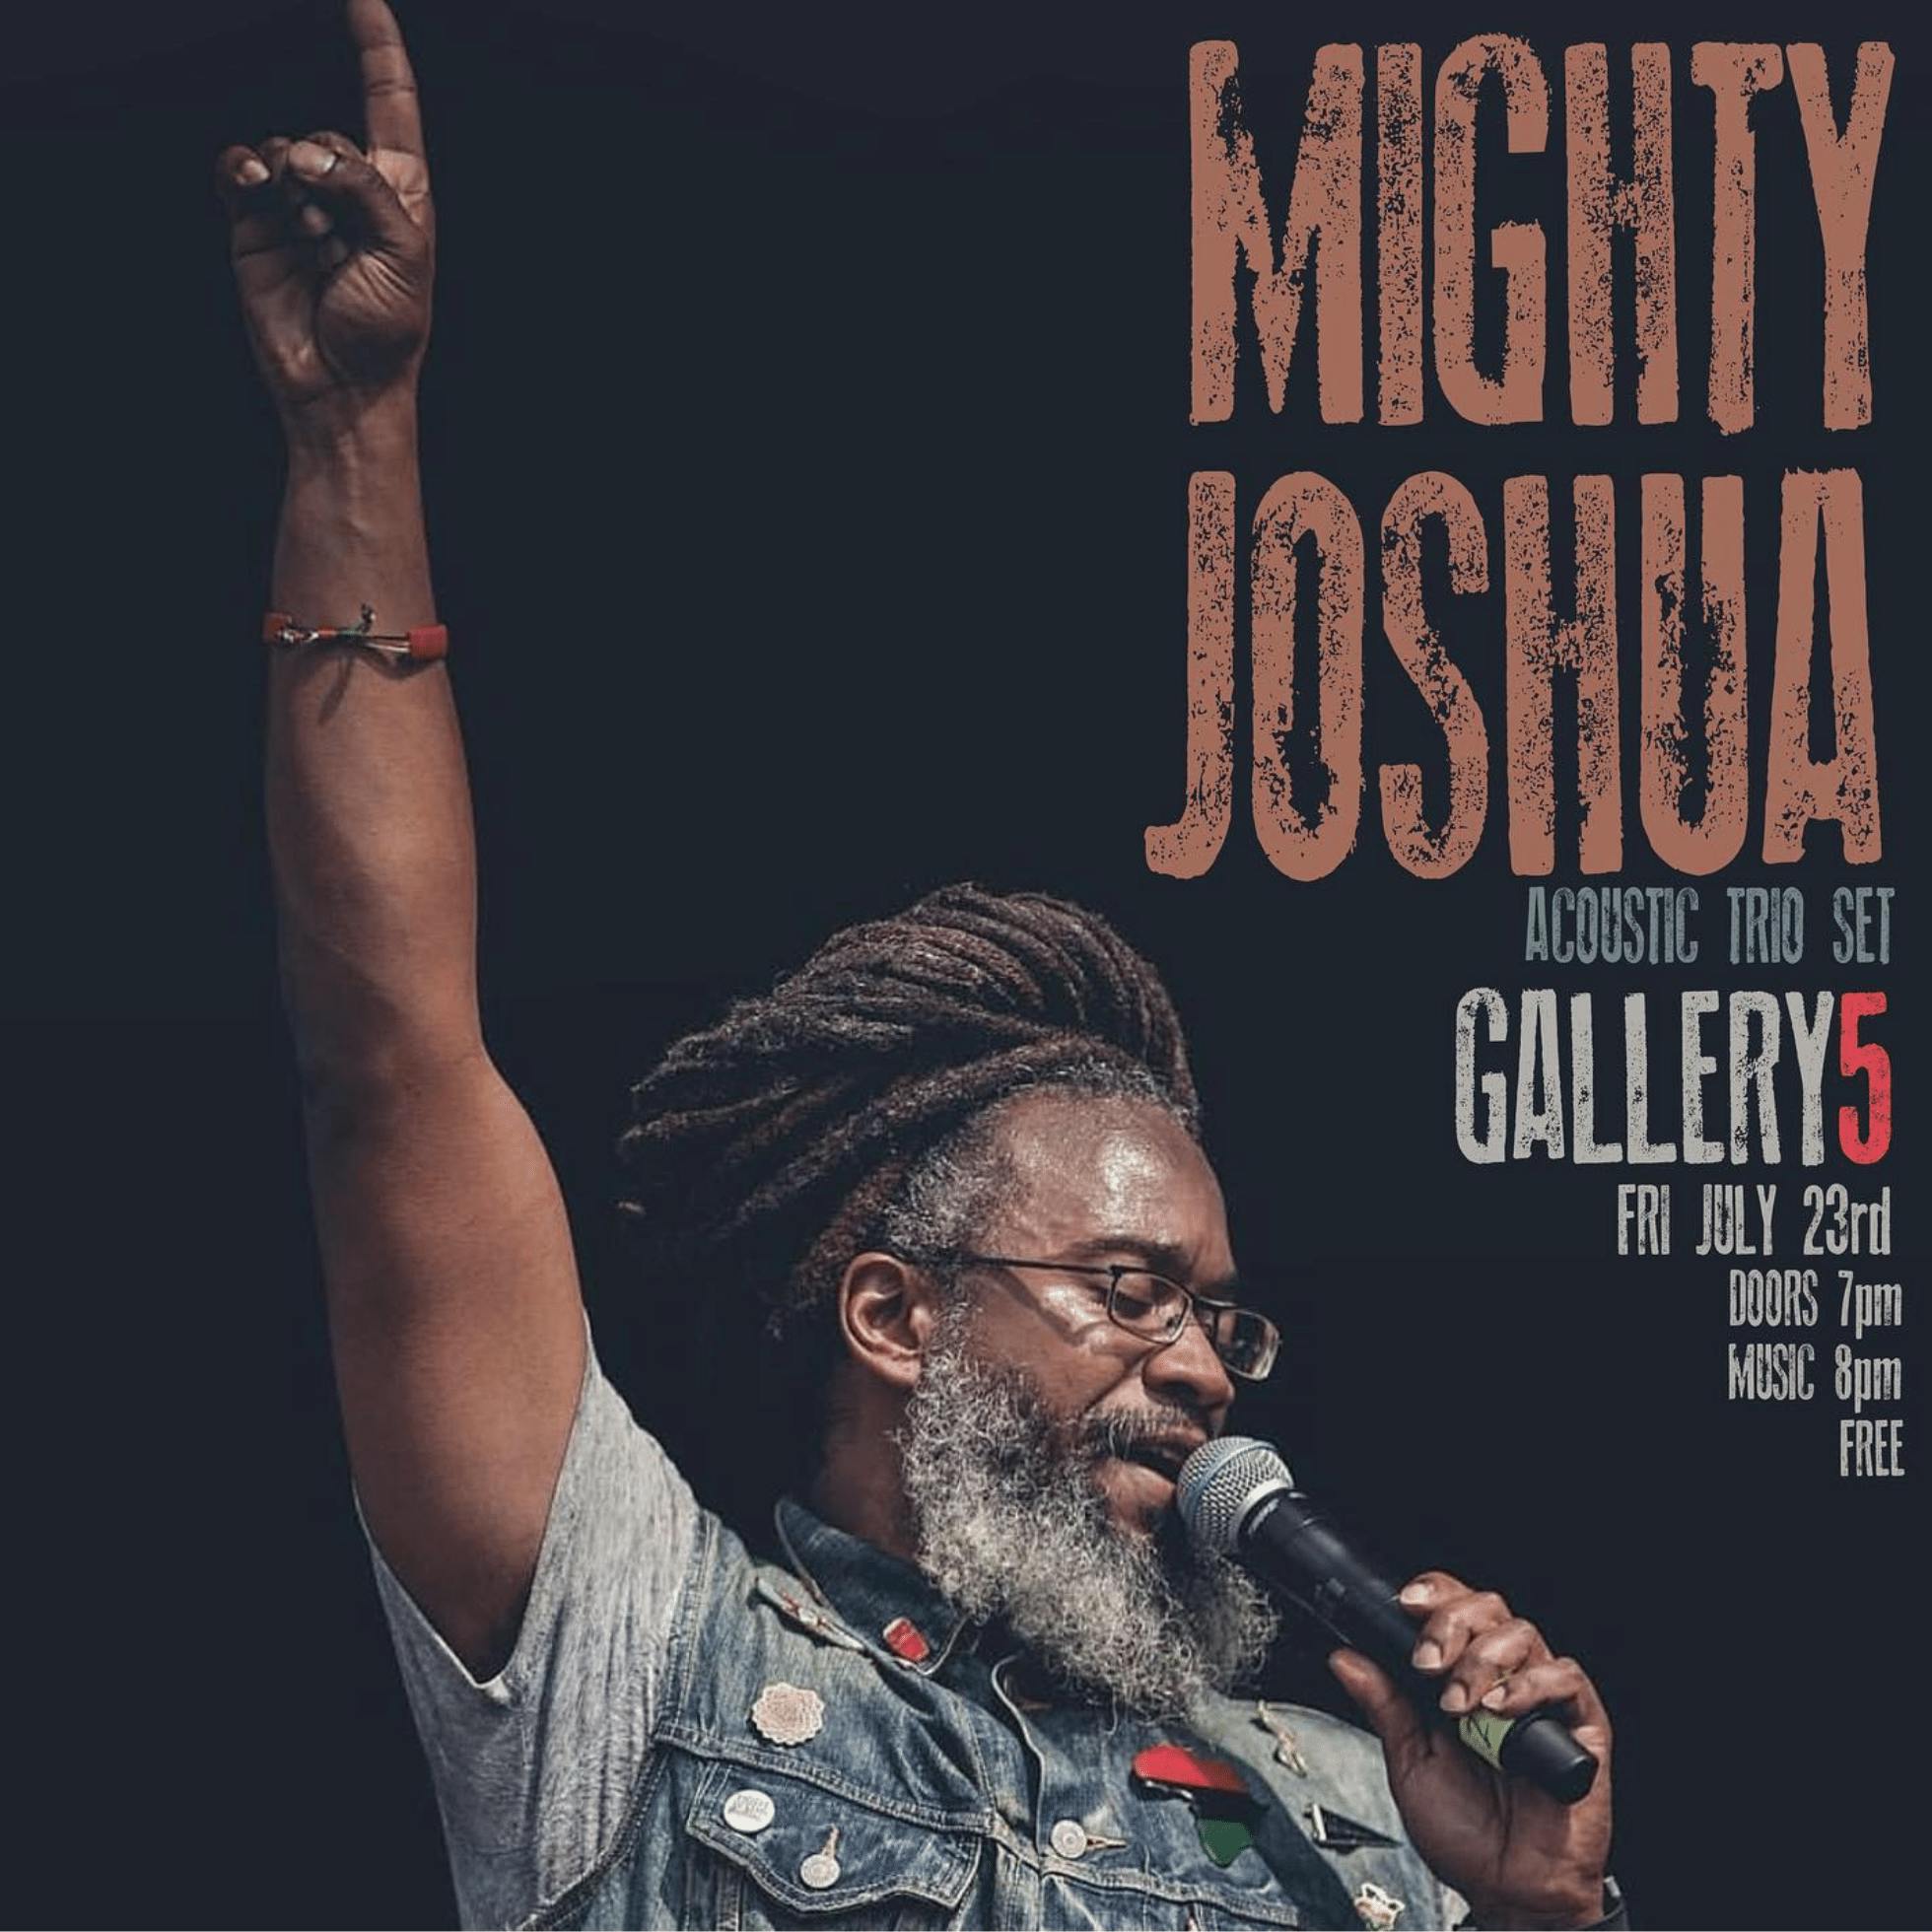 Mighty Joshua at Gallery5